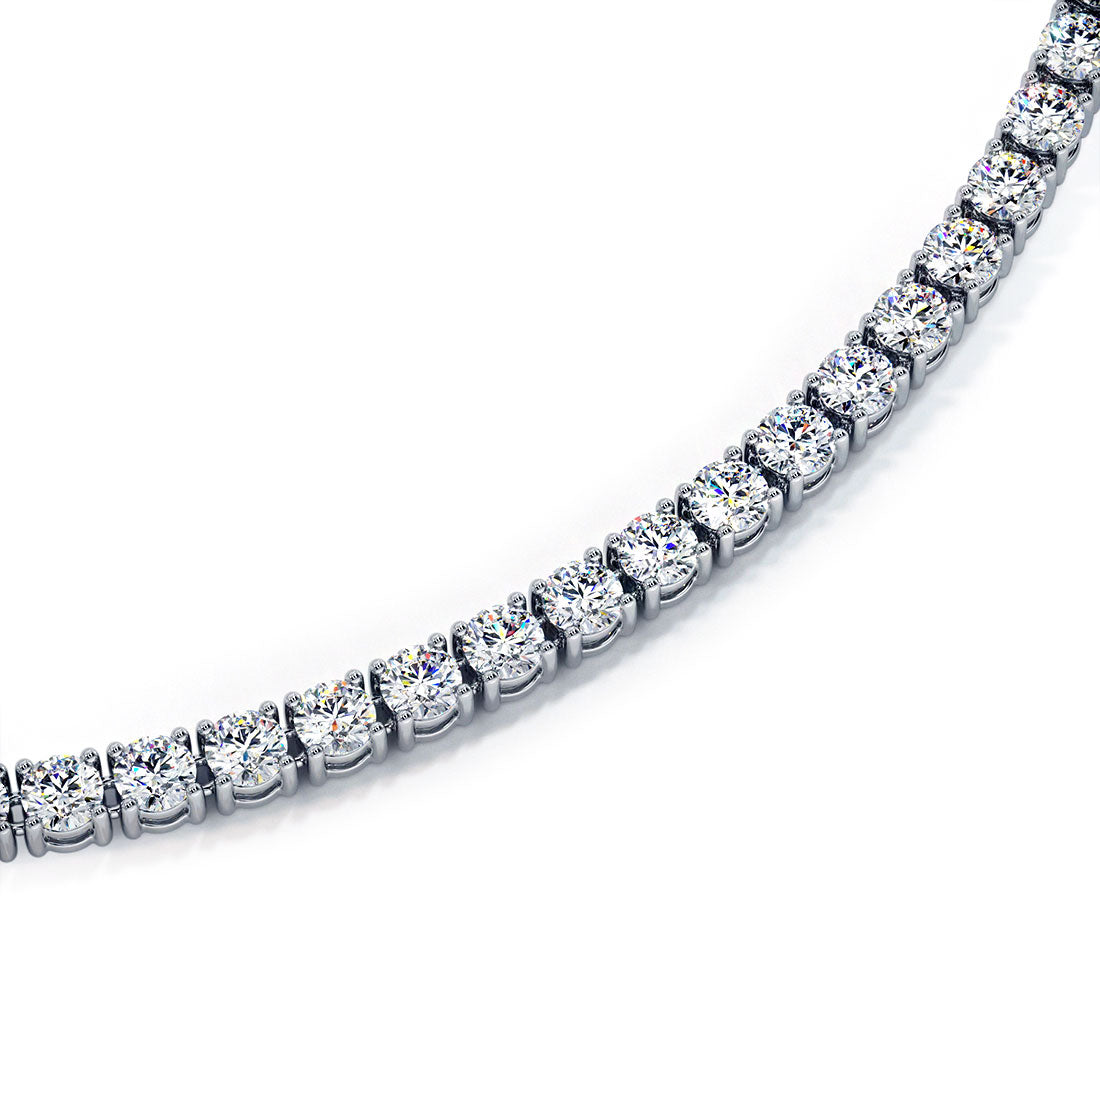 Shine Bright Like a Diamond Necklace and Wrap Bracelet - J Grace Designs ~  Jewelry by Jami Miller